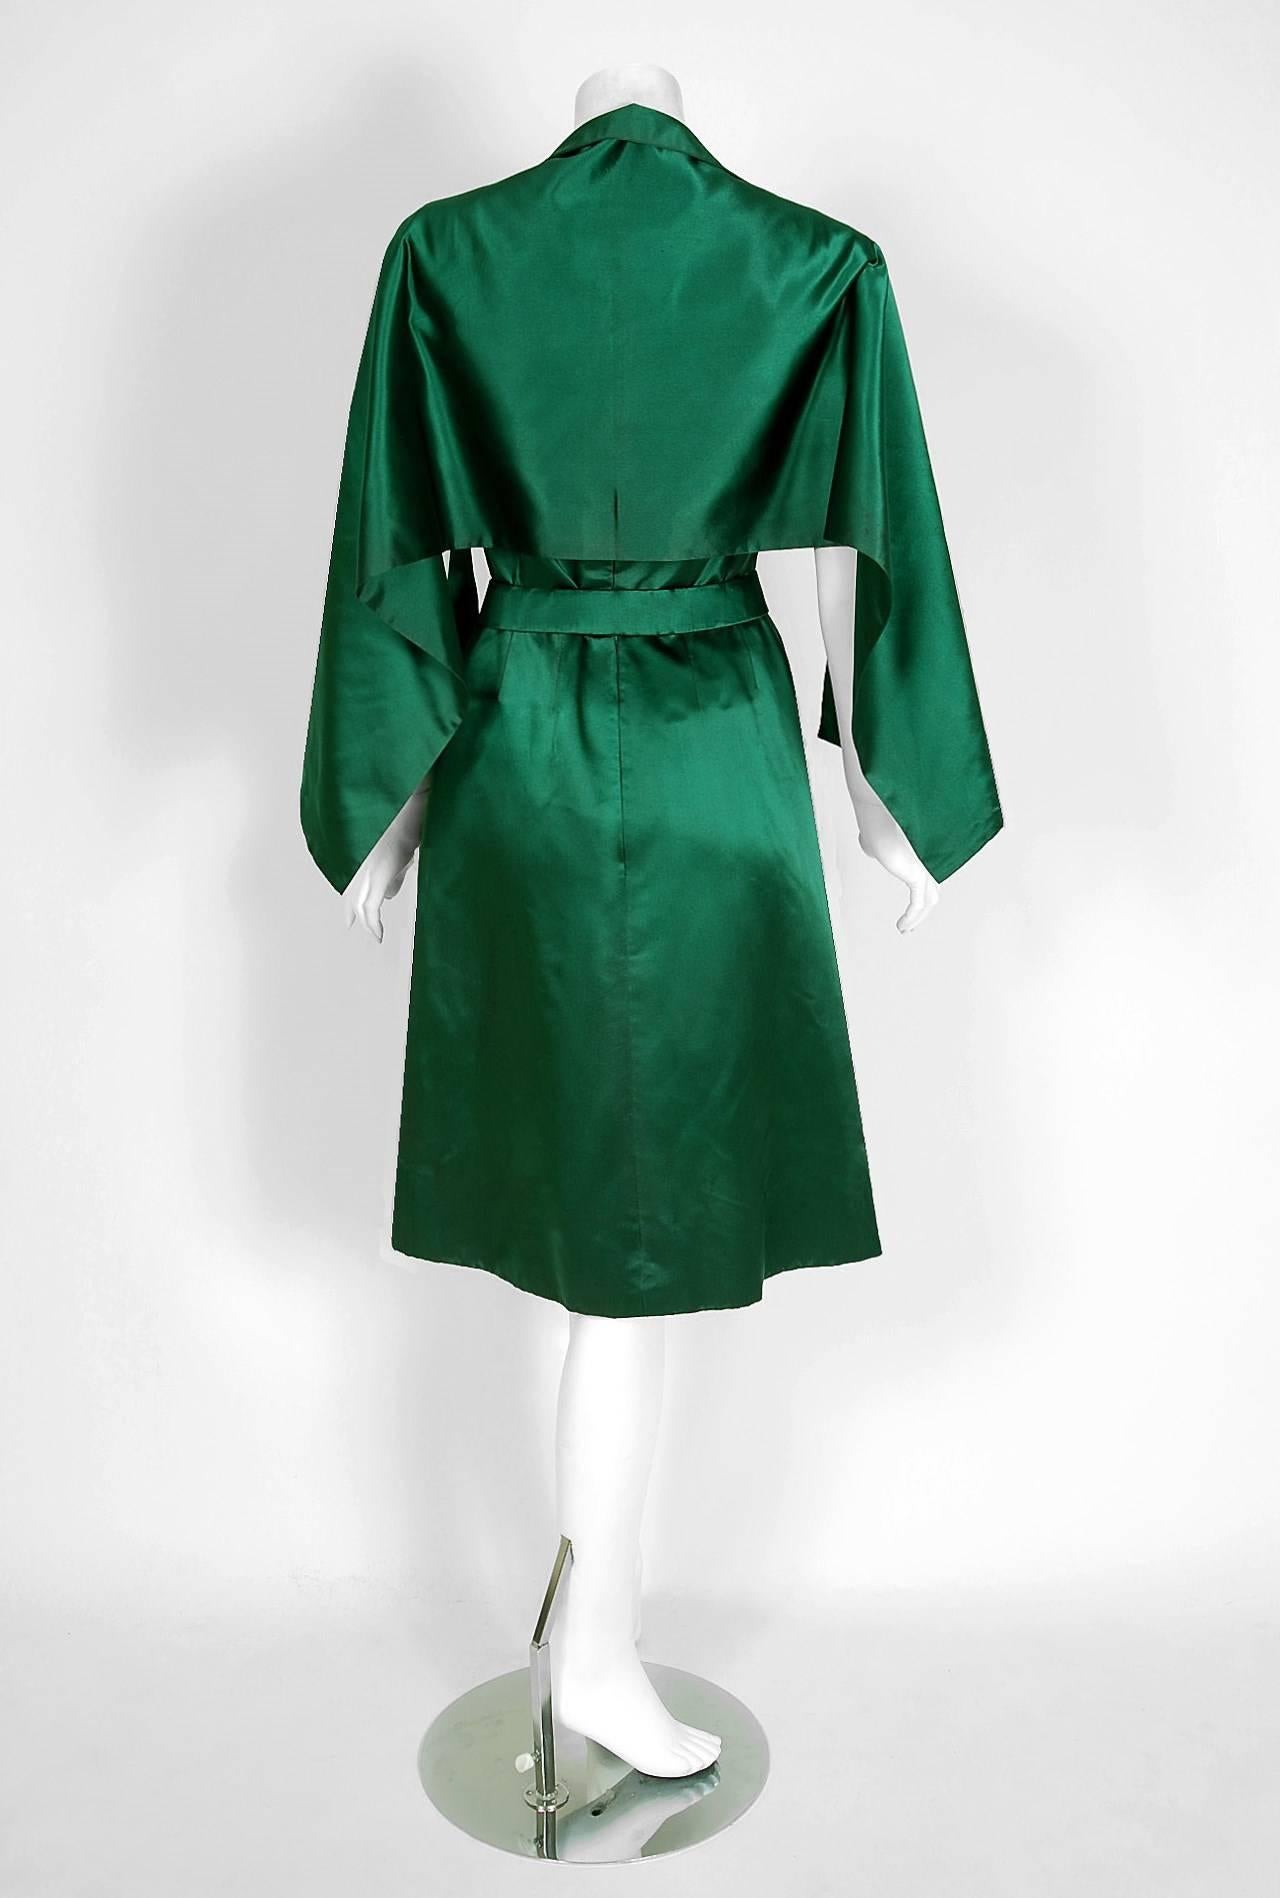 Women's 1960 Christian Dior Paris Demi-Couture Emerald Green Satin Party Dress & Shawl